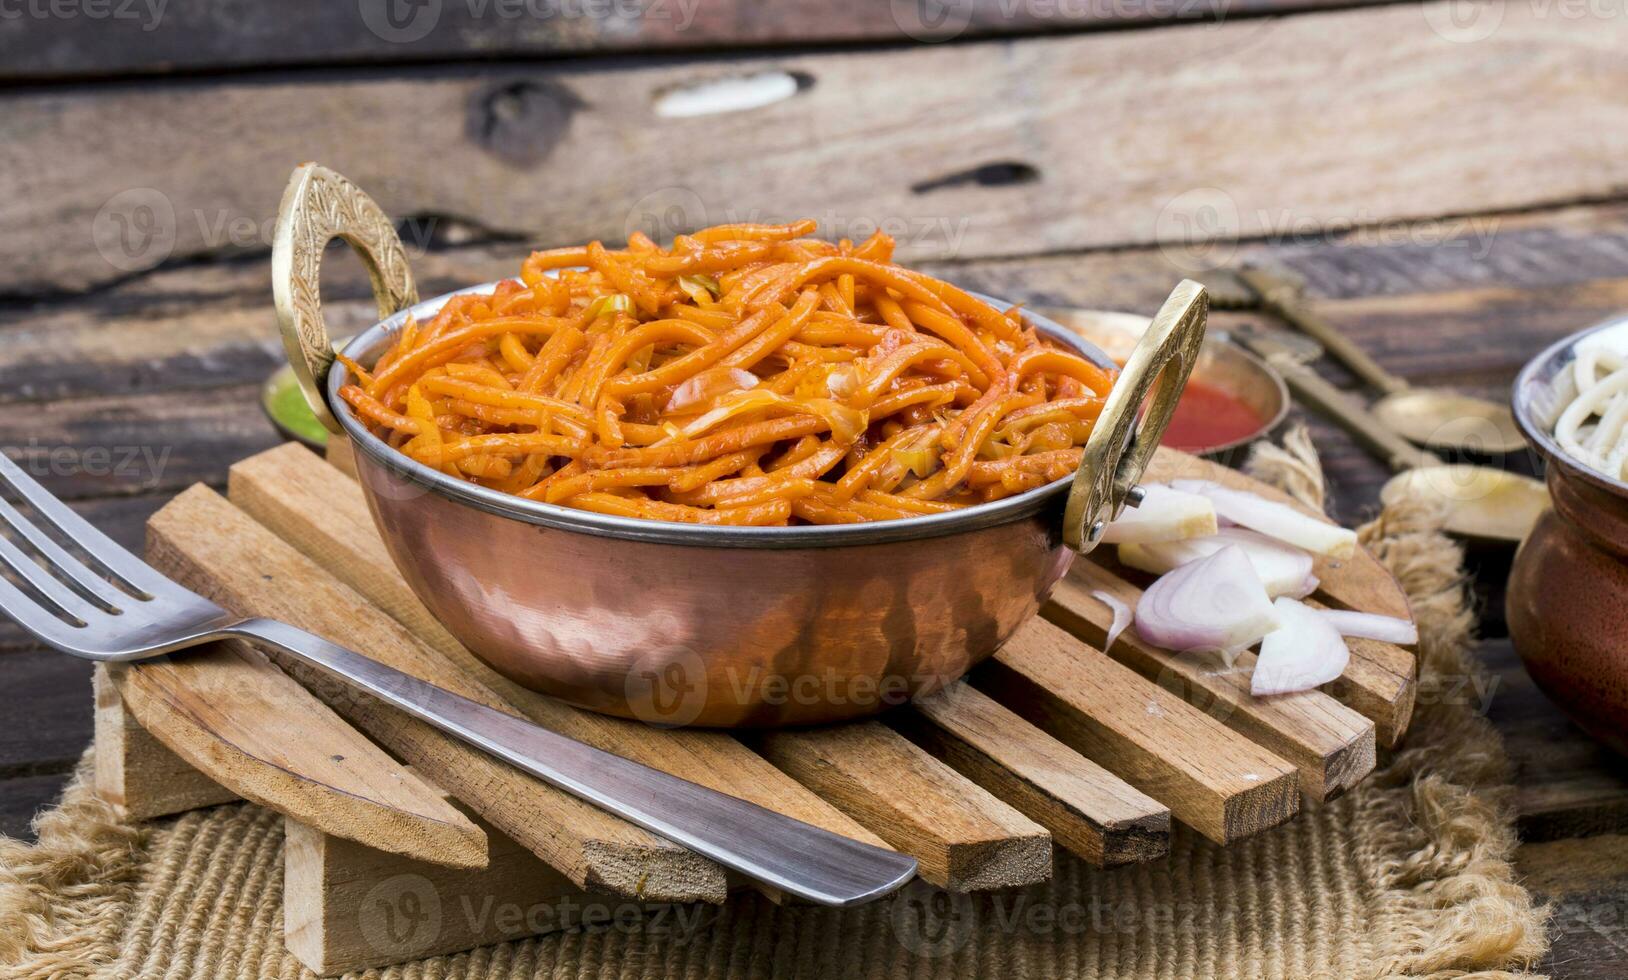 picante frito vegetal verduras perro chino mein en de madera mesa foto